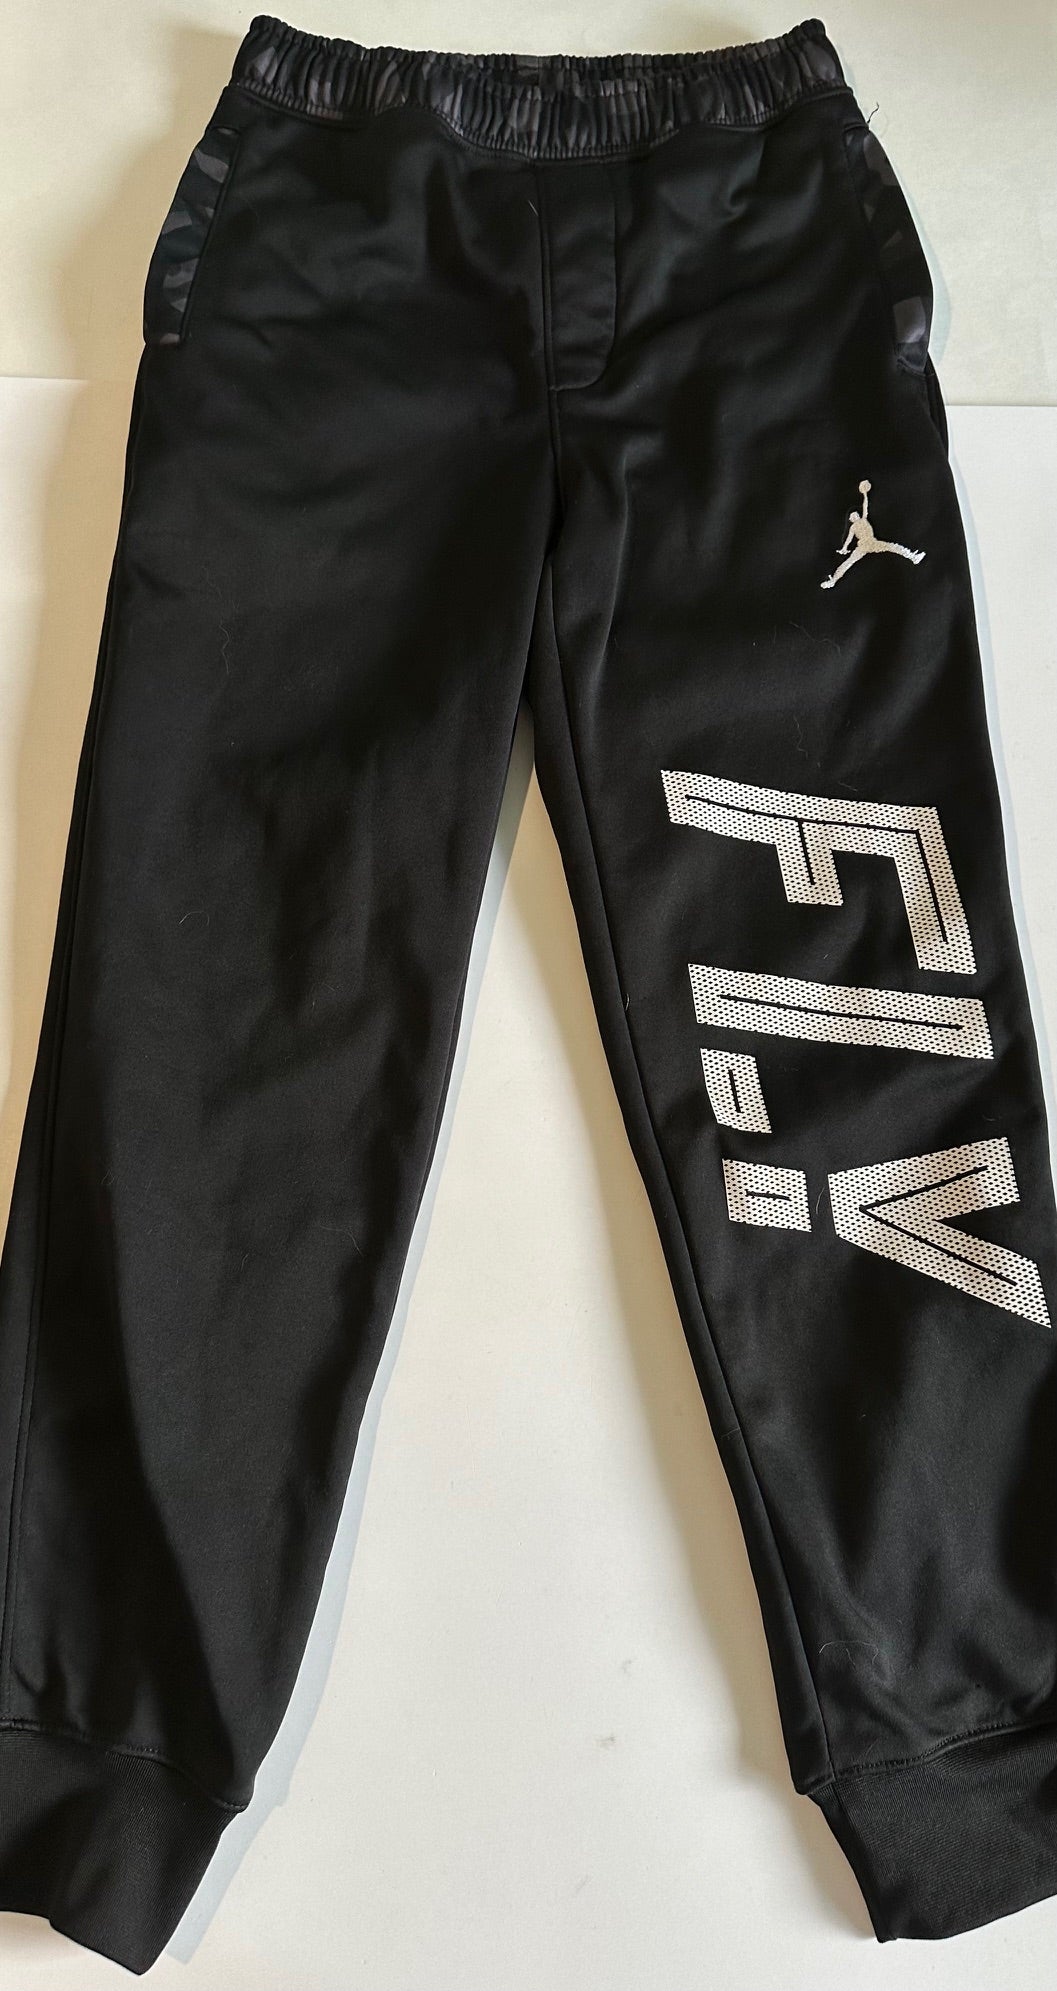 Air Jordan, Black "Fly" Pants - Size Medium (10-12)